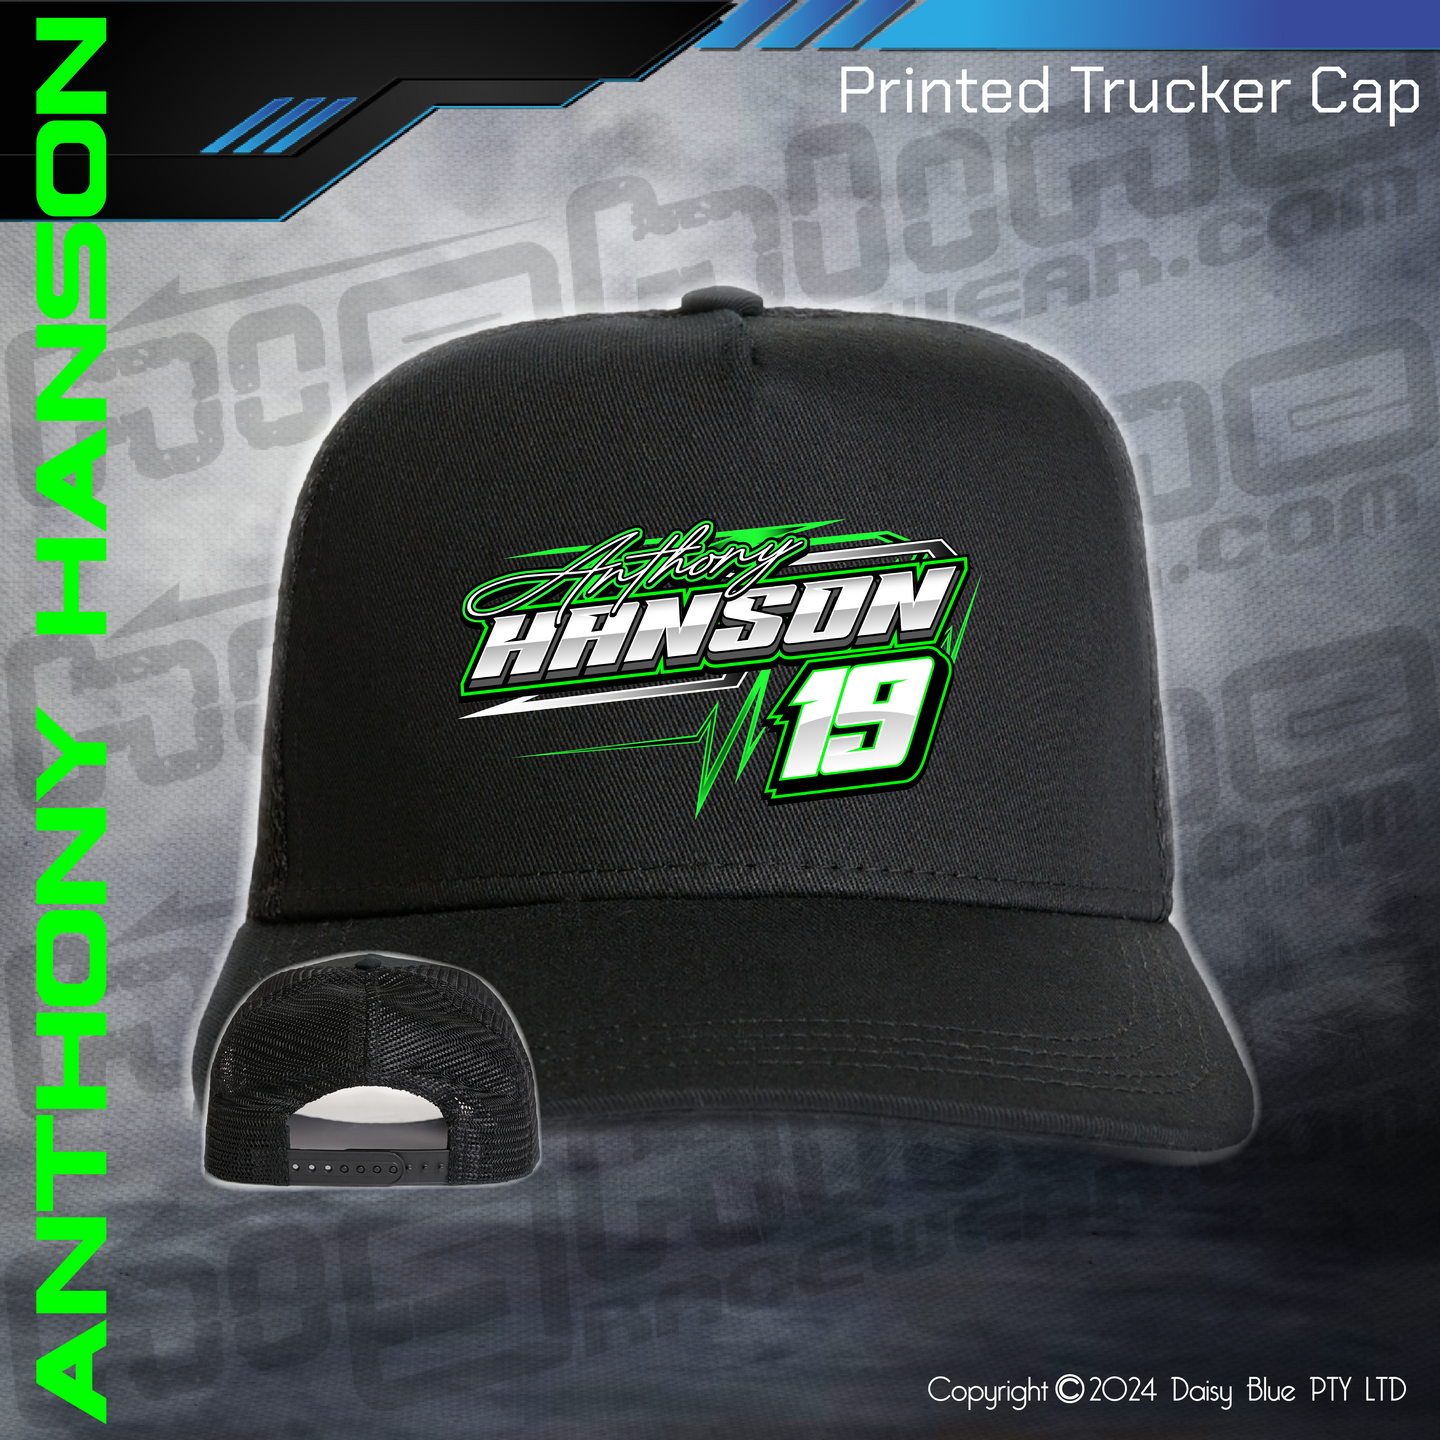 Printed Trucker Cap - Anthony Hanson